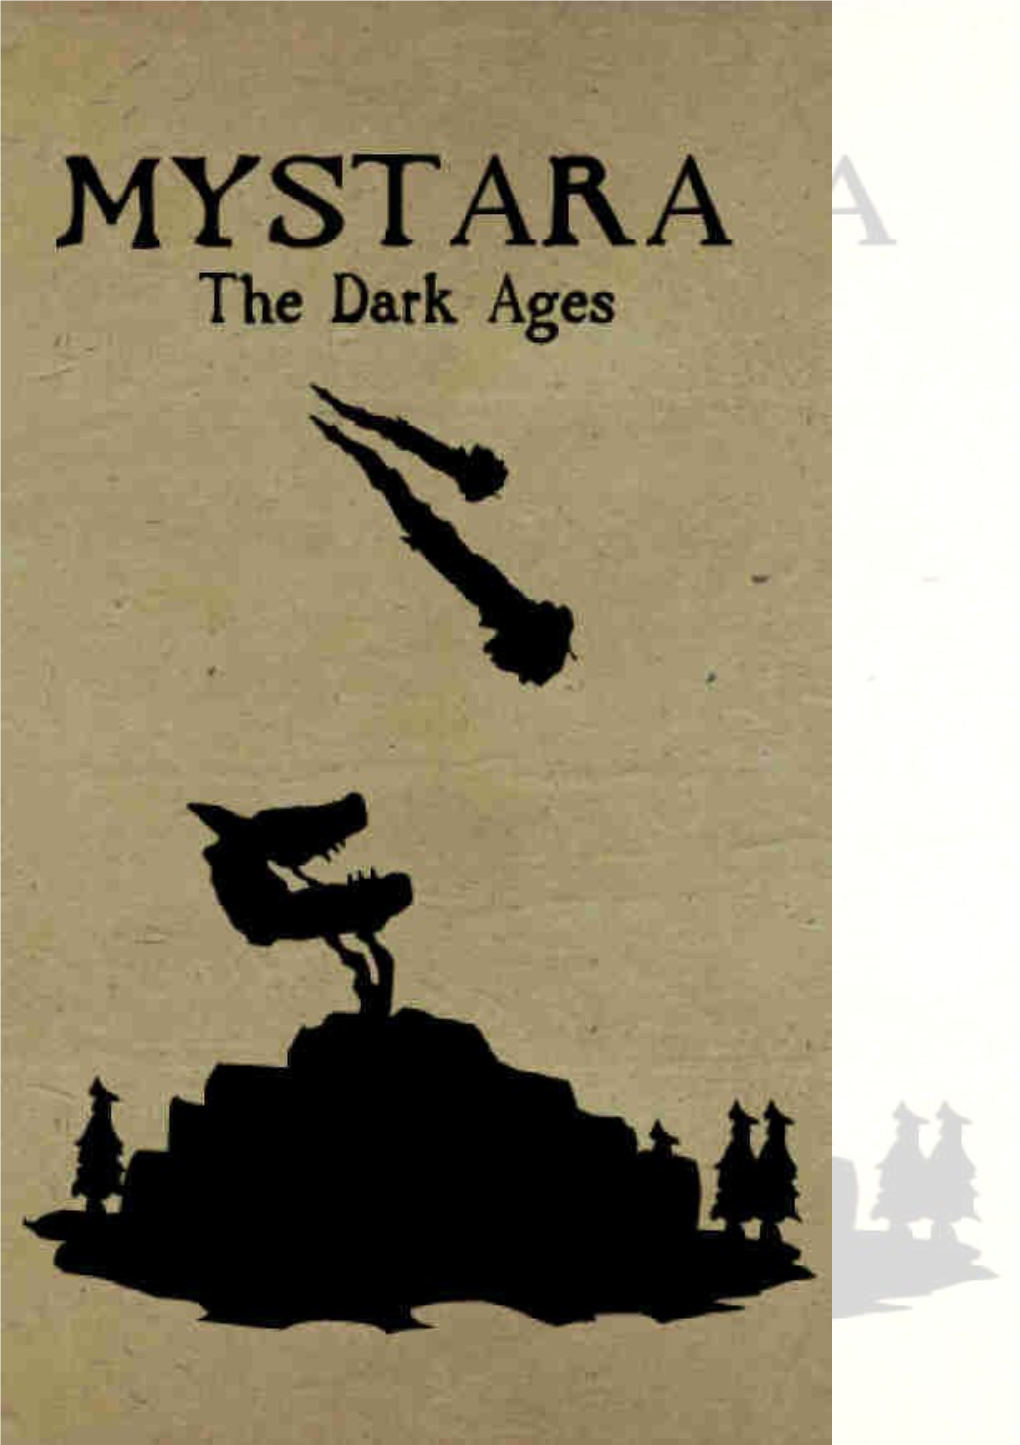 A Mystara for Dungeons & Dragons Fourth Edition